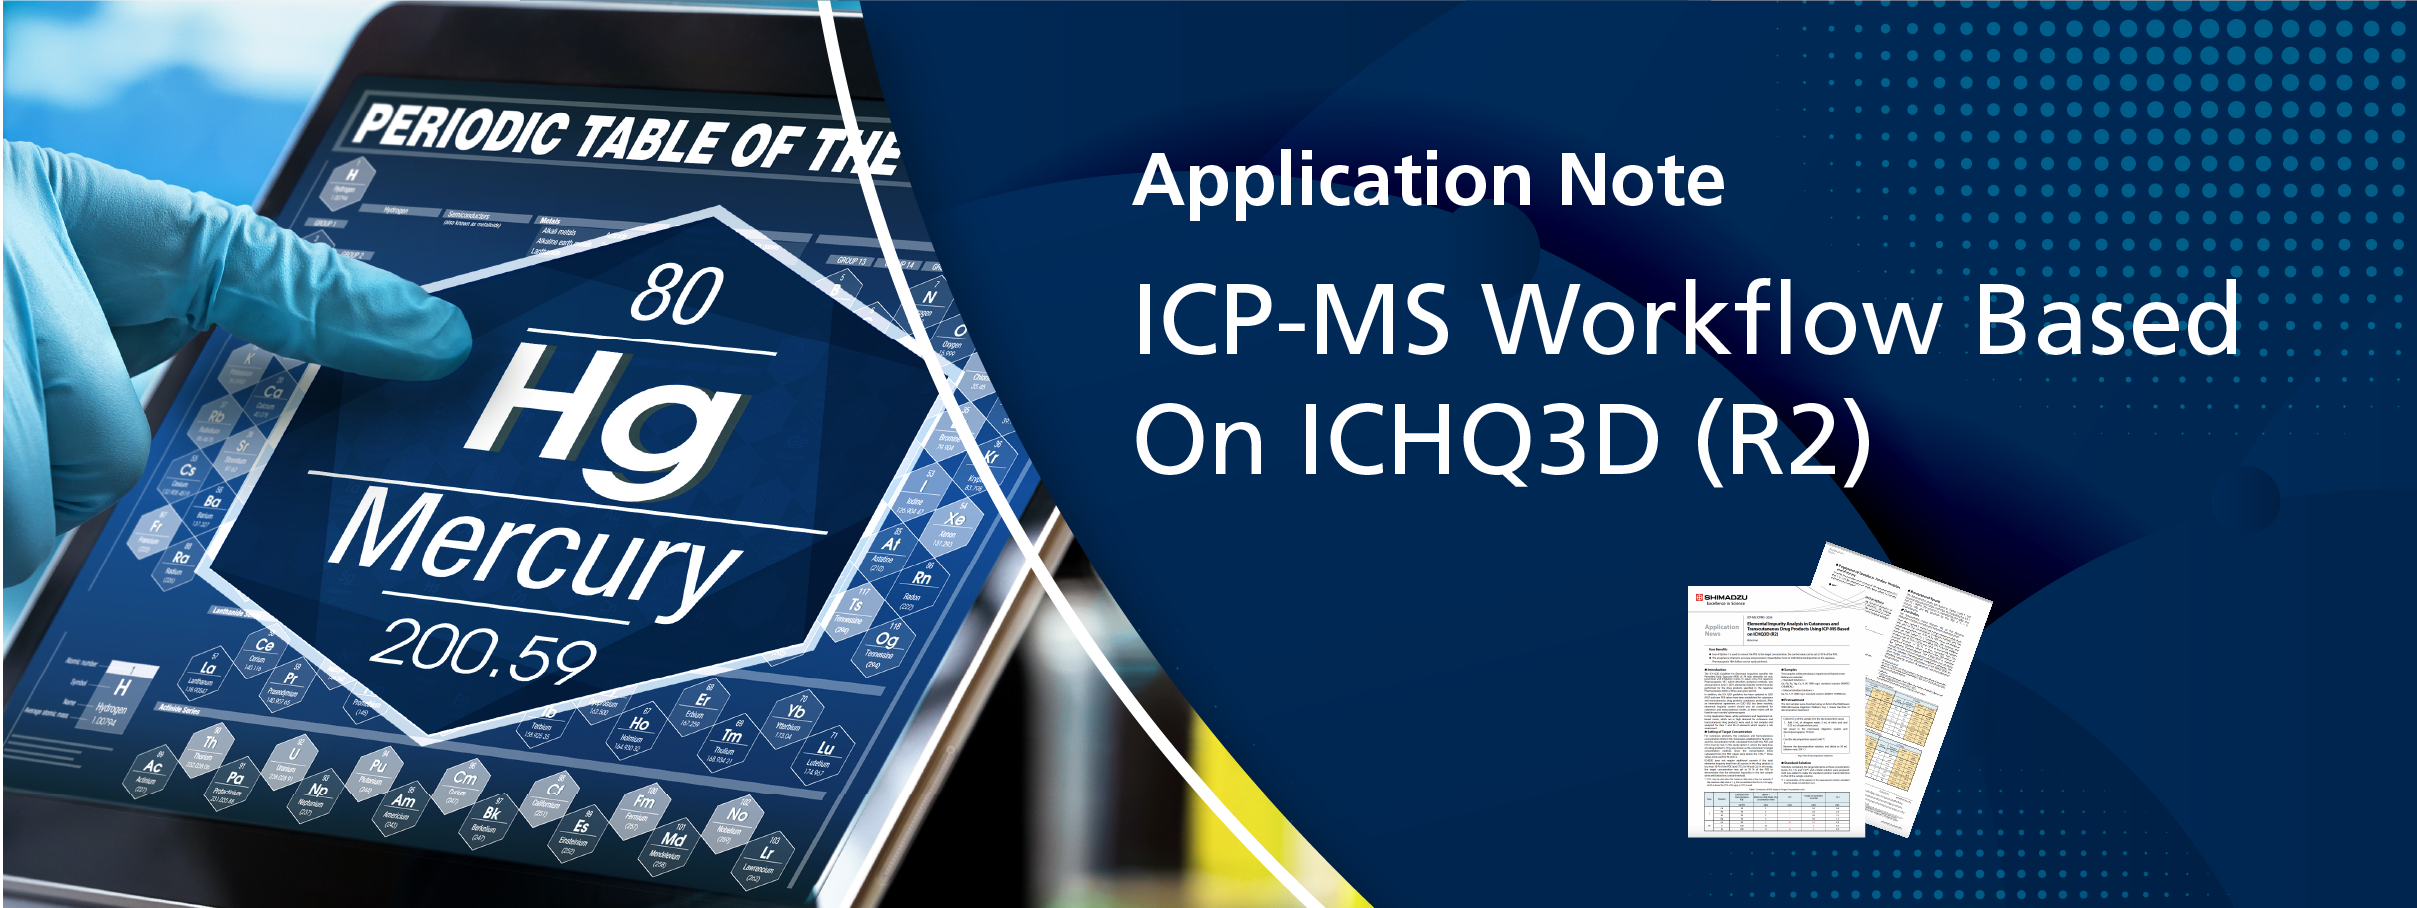 ICP-MS Workflow Based on ICHQ3D (R2)